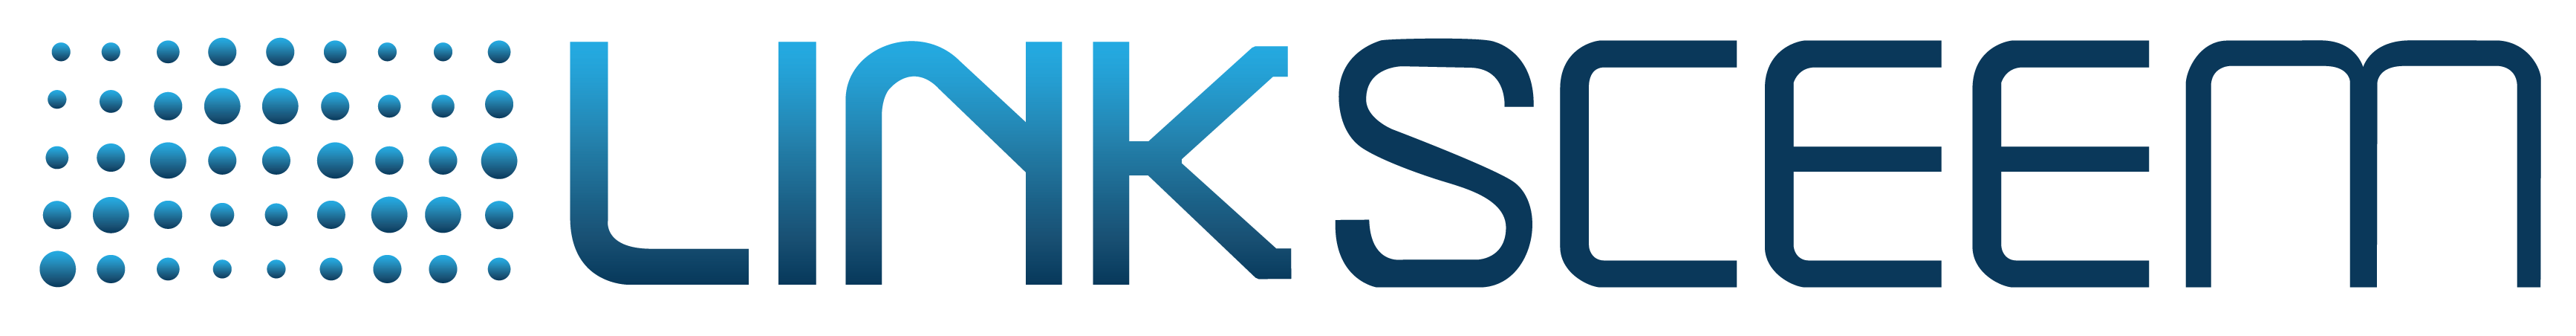 LinkSCEEM logo